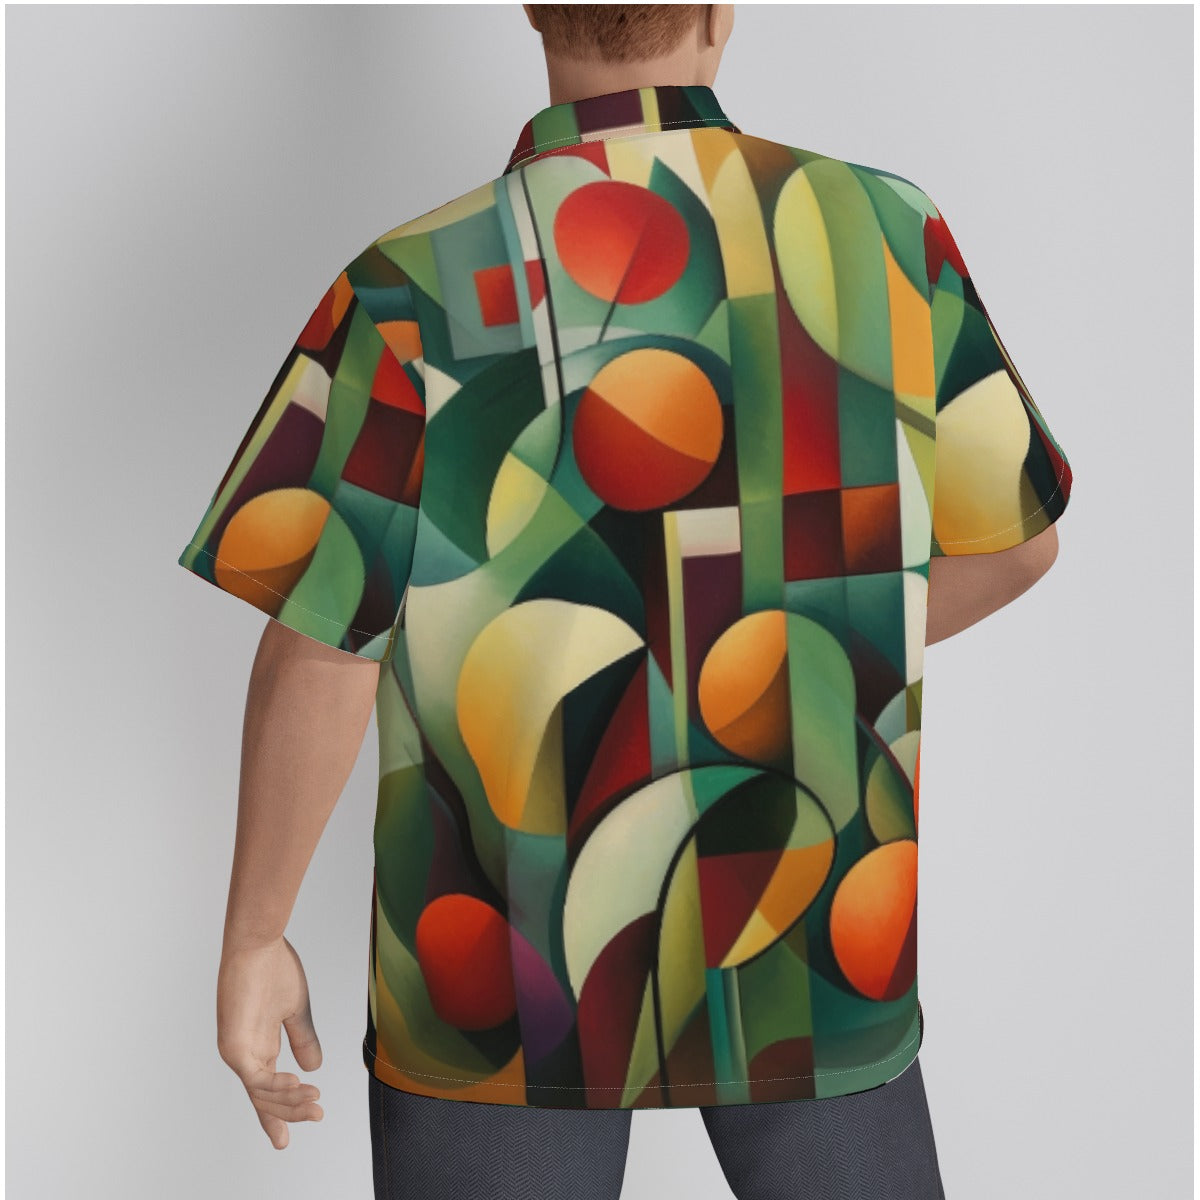 3QYNK All-Over Print Men's Hawaiian Shirt With Button Closure |115GSM Cotton poplin